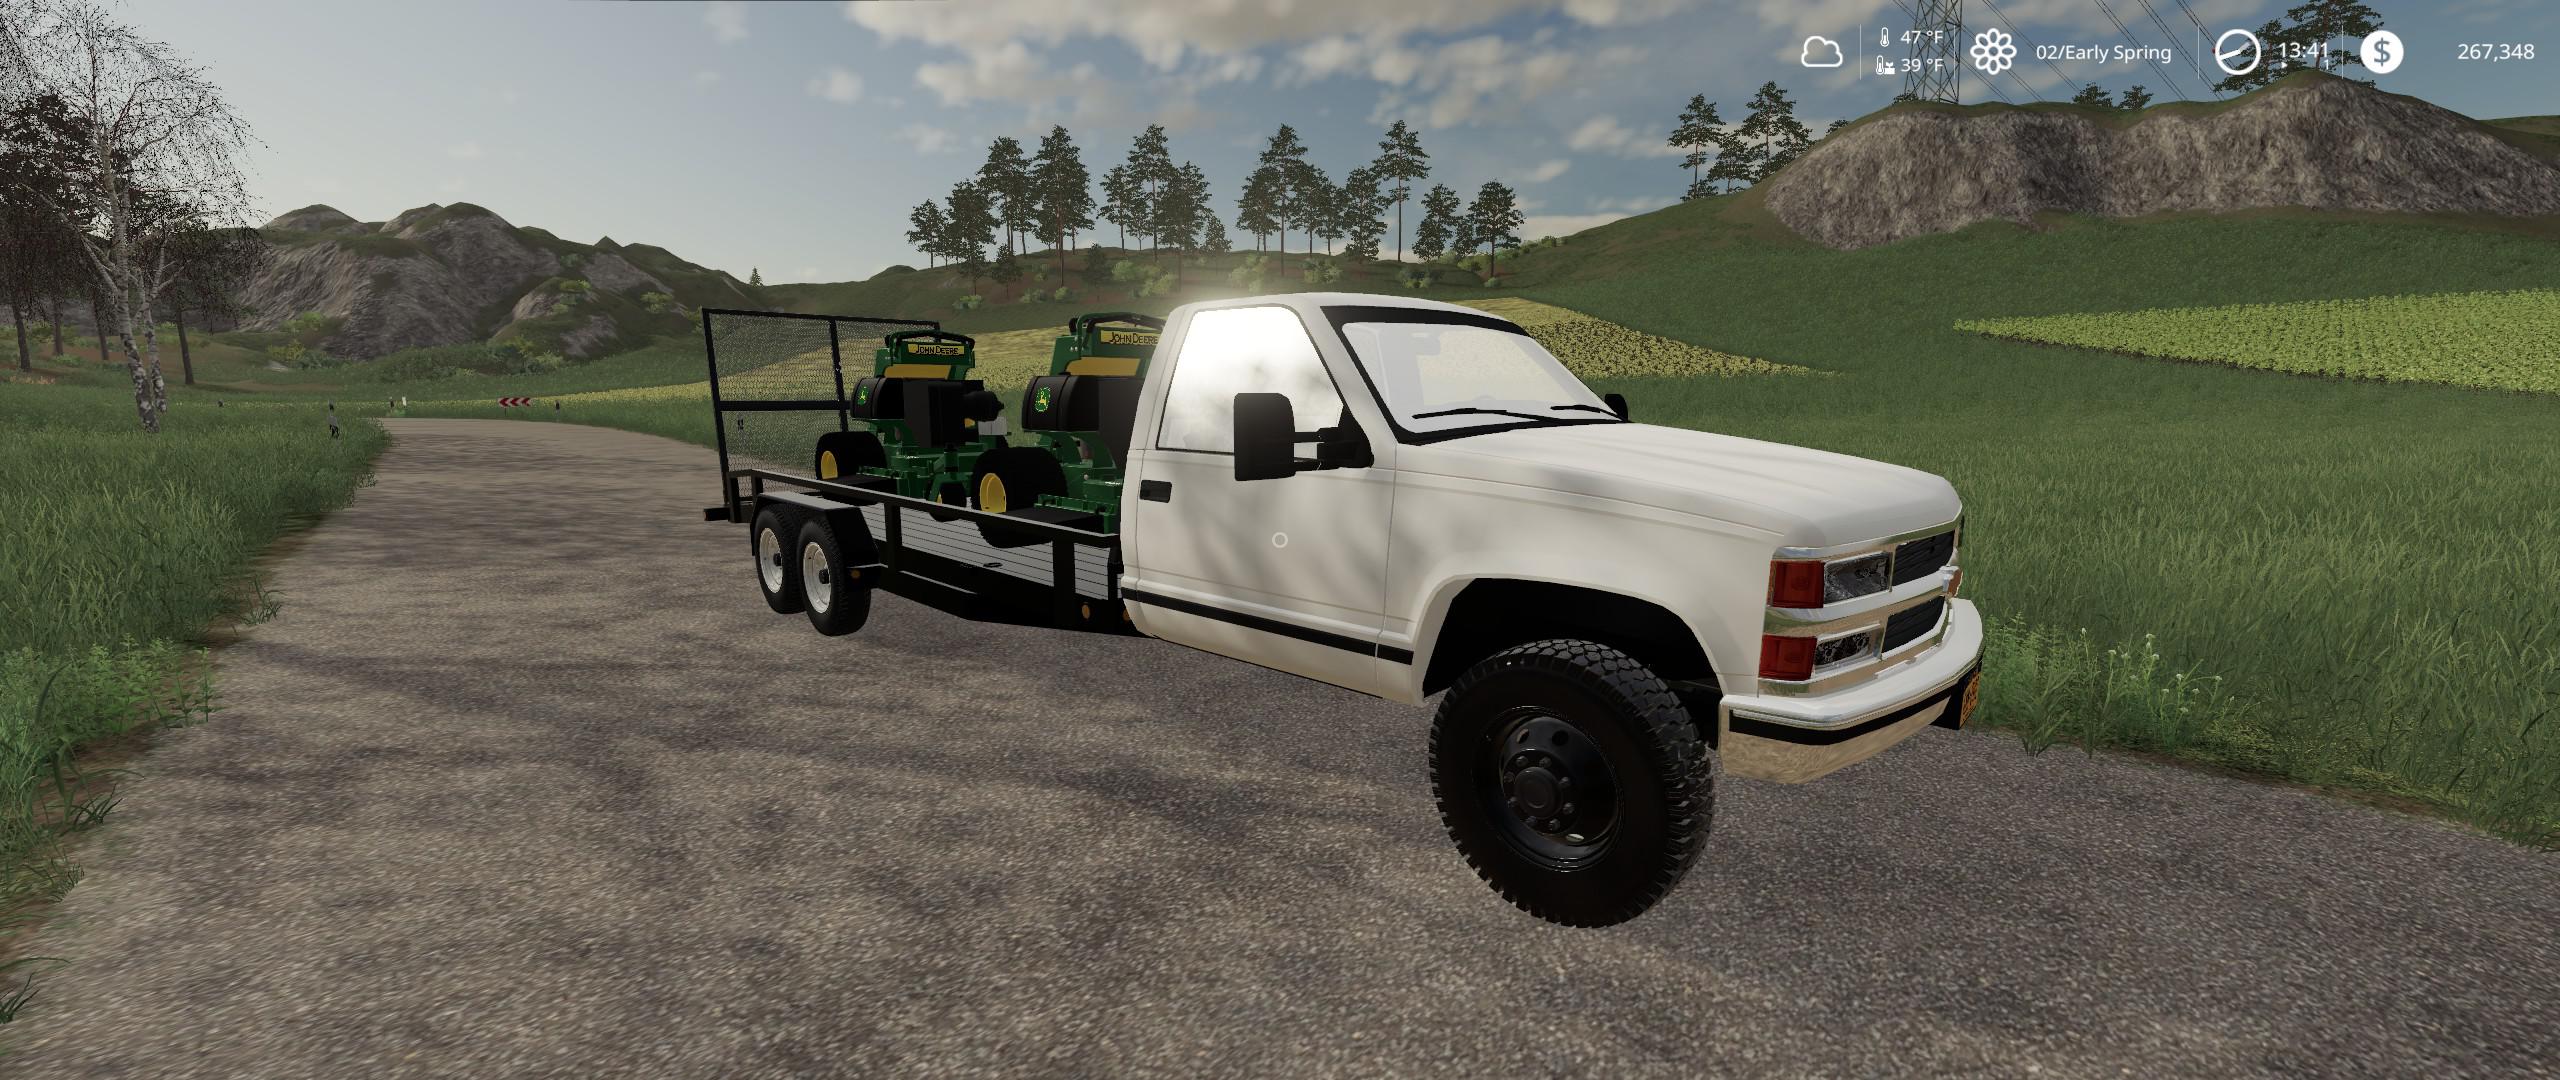 Silverado Landscape Truck V1 0 For Fs 2019 Farming Simulator 2022 Mod Ls 2022 Mod Fs 22 Mod